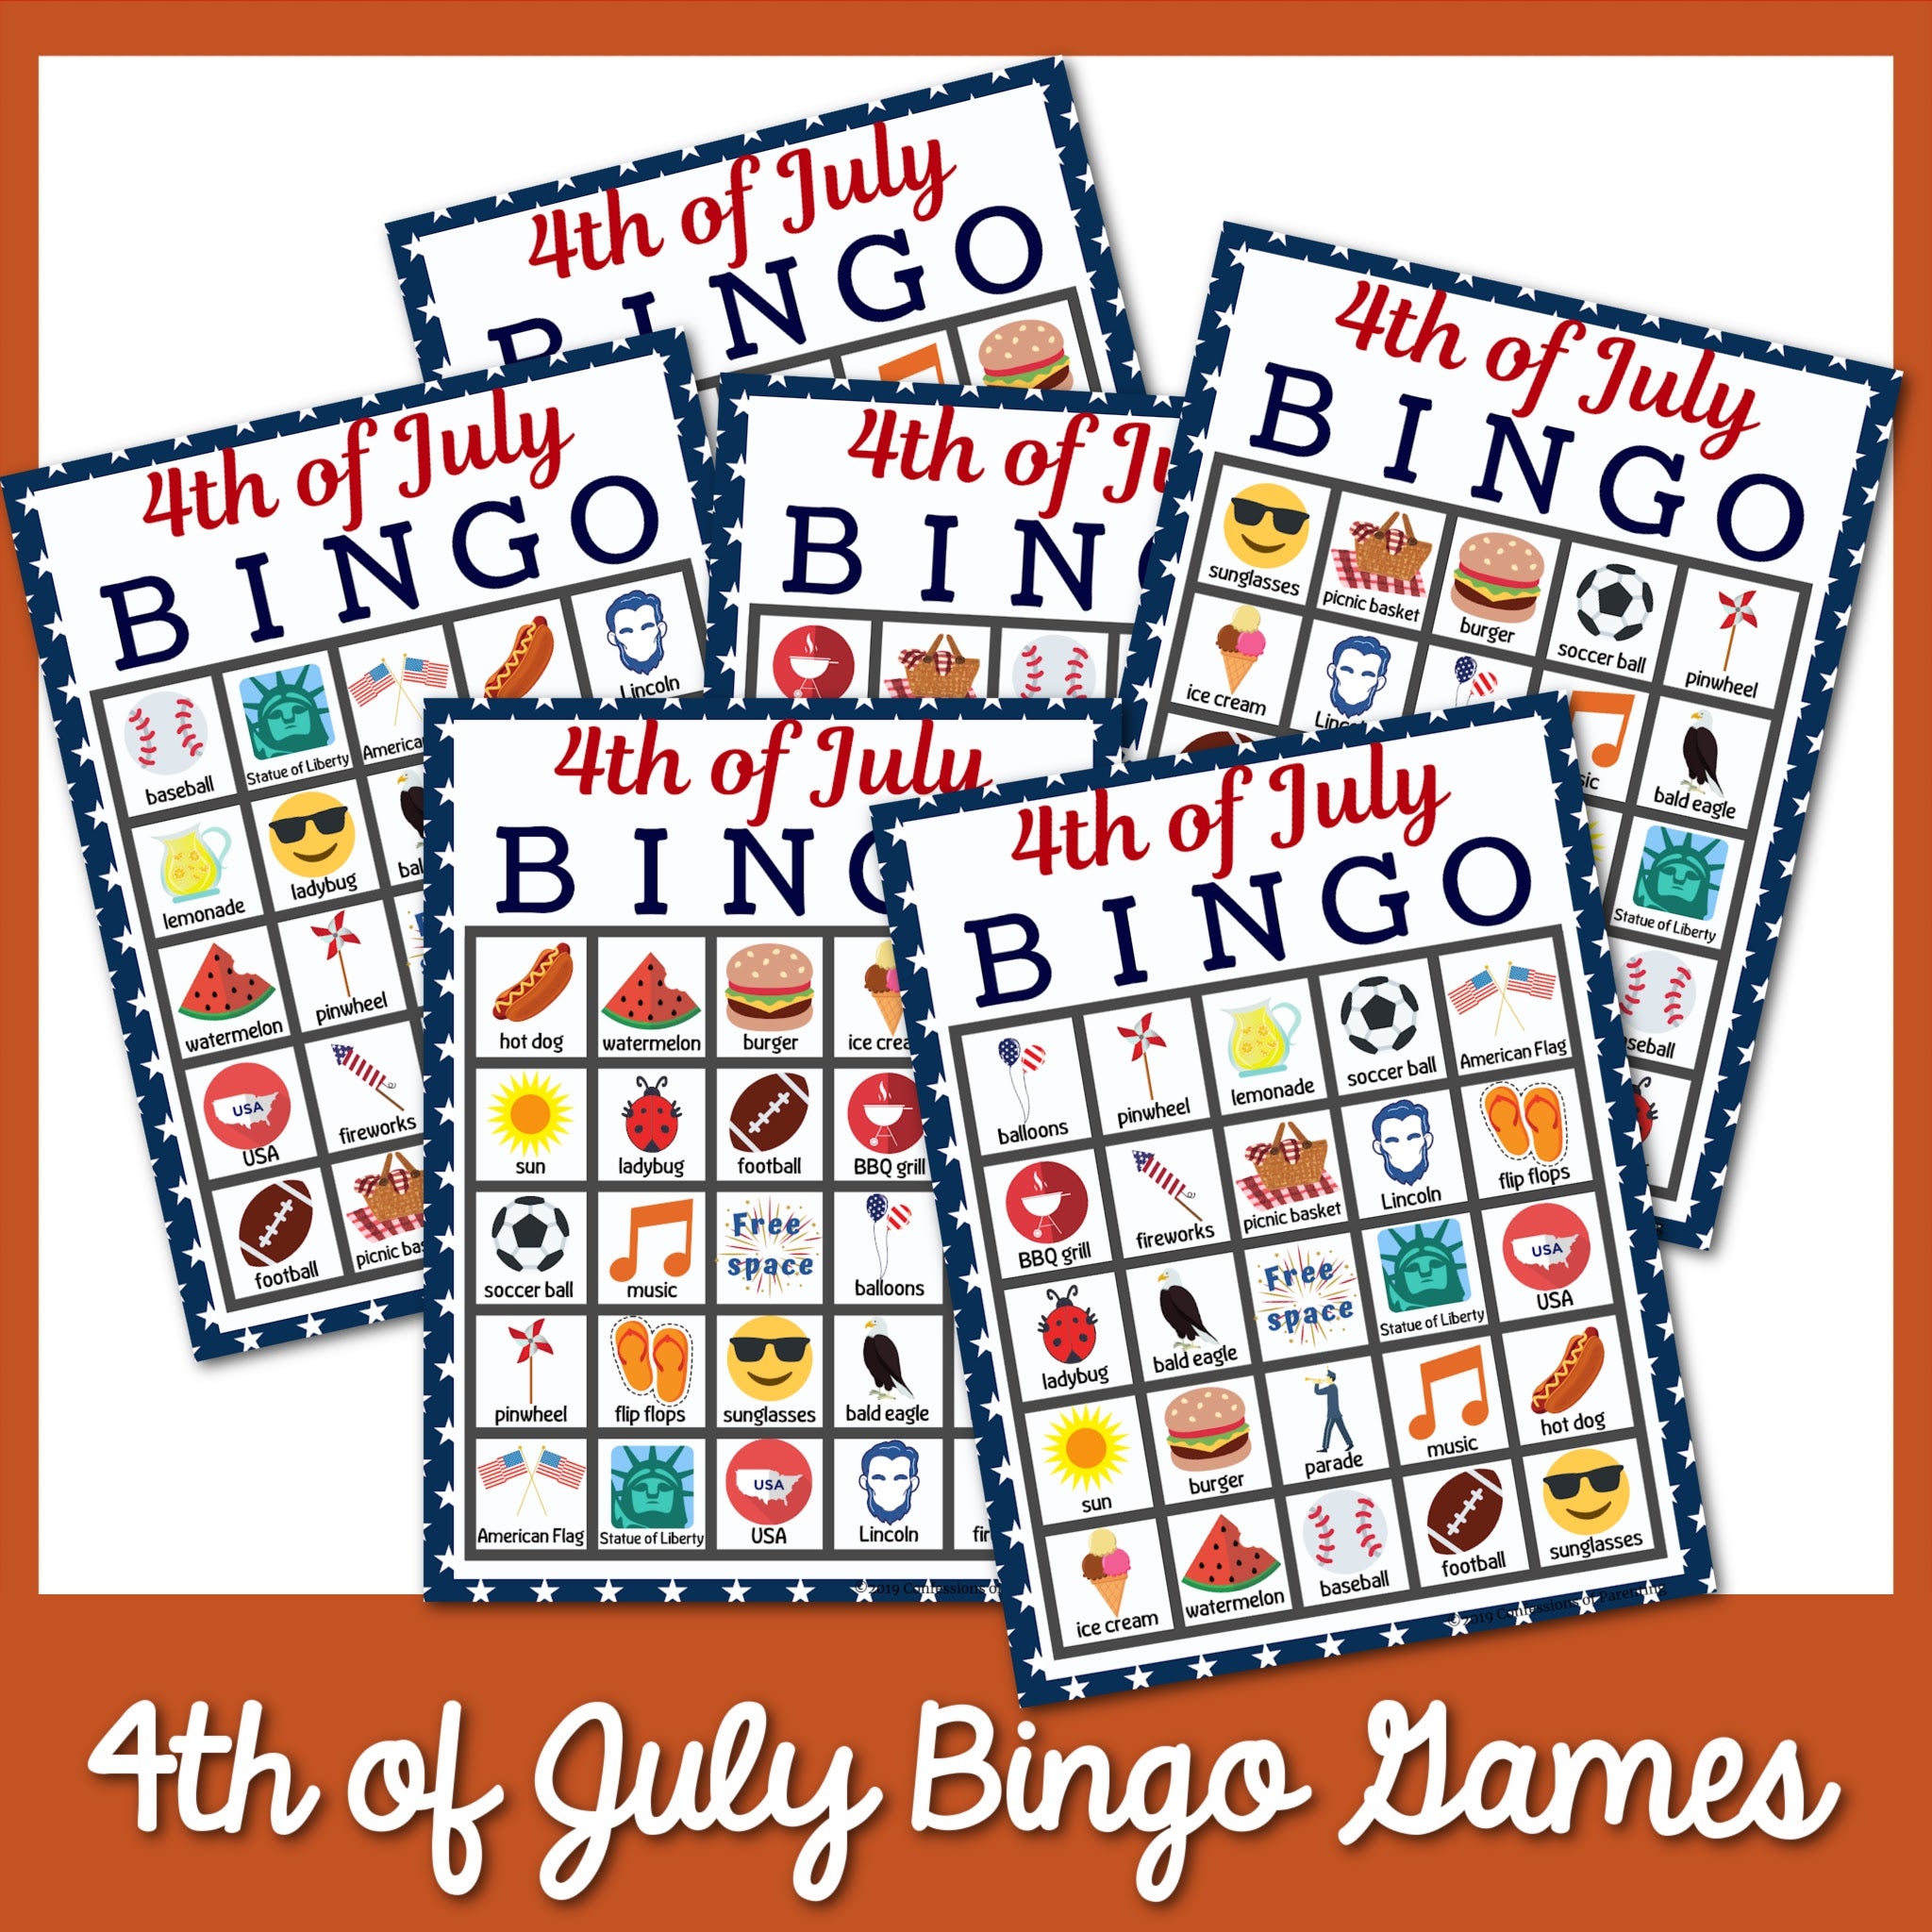 4th of July Bingo Games